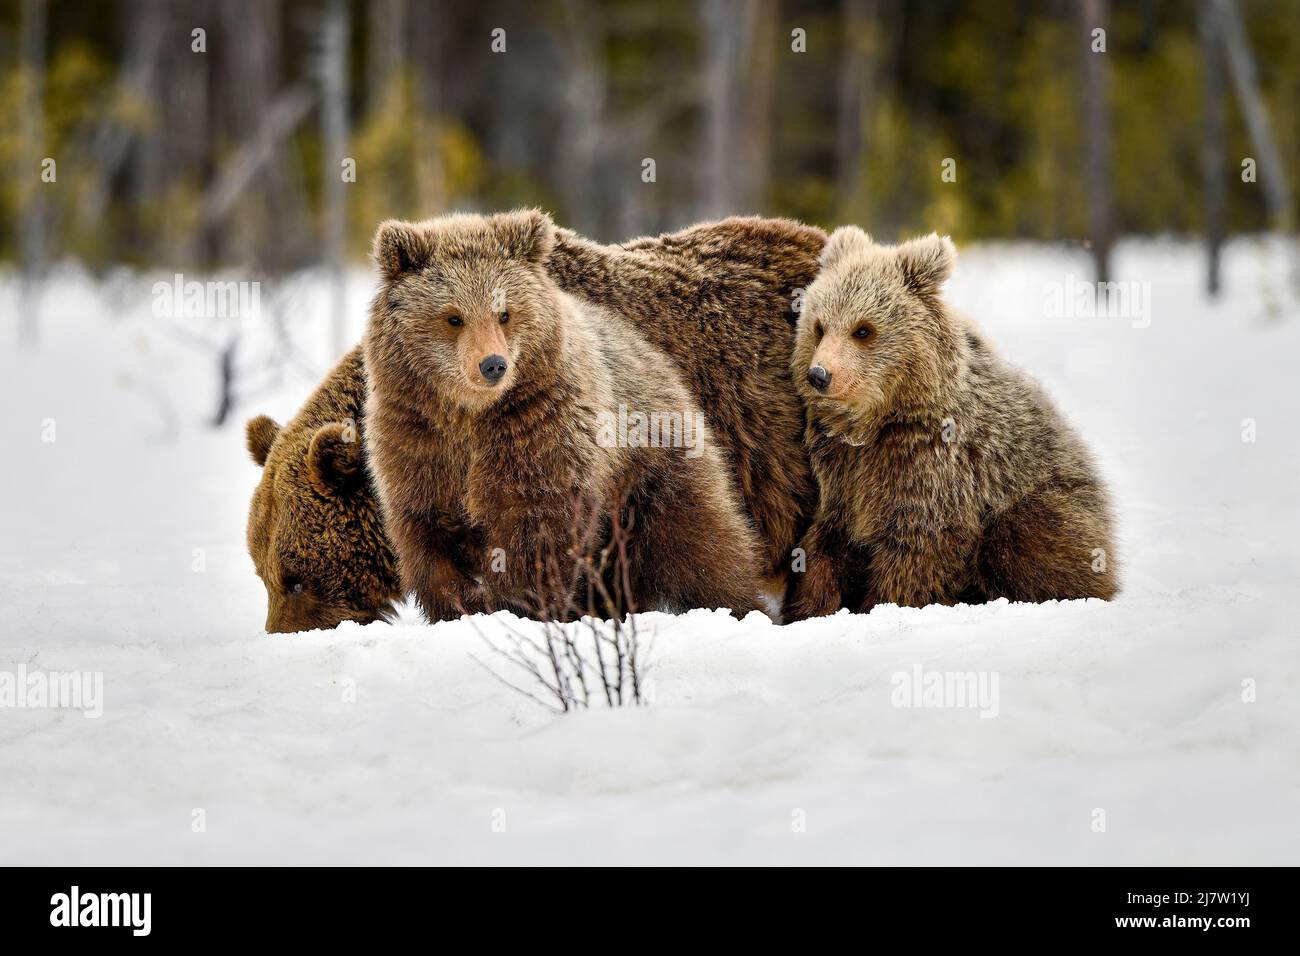 Safely alongside the mother bear Stock Photo